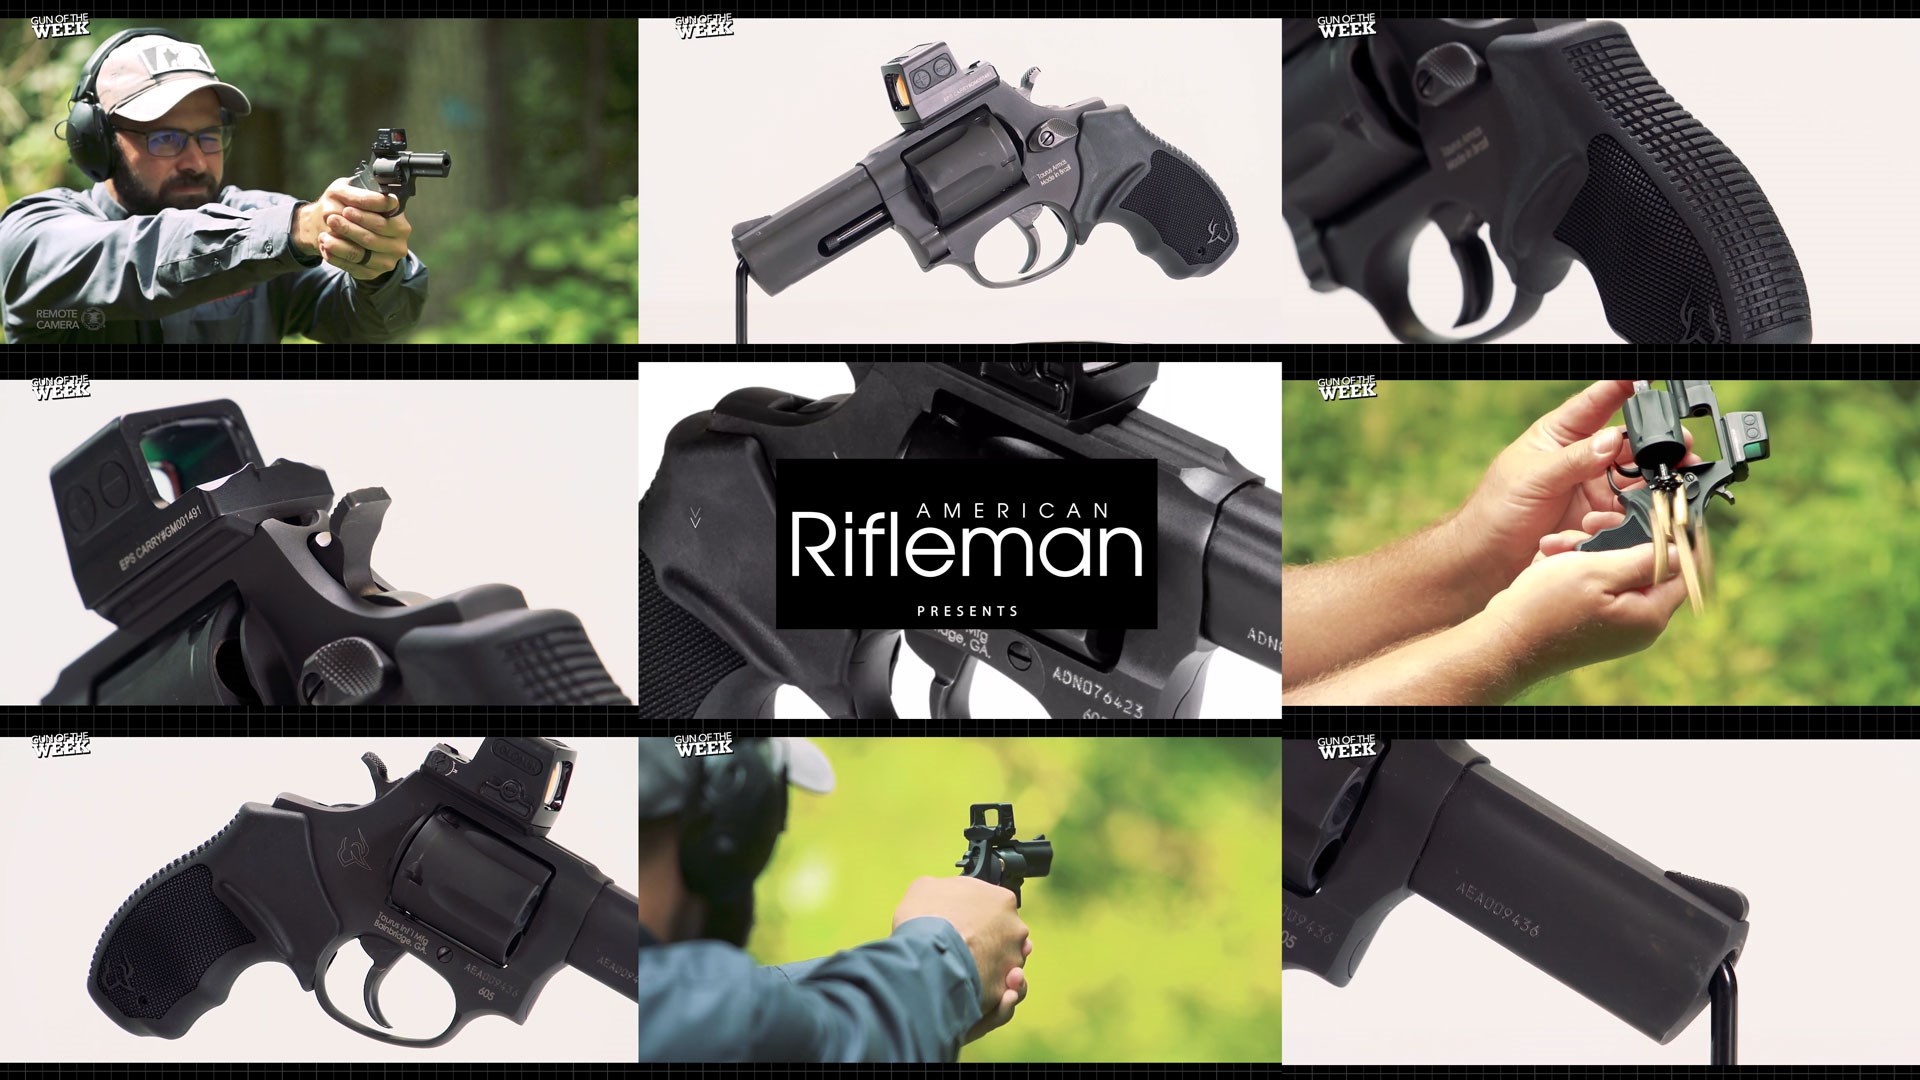 American Rifleman text center tile 9 images mosaic guns men shooting outdoors closeup detail revolver parts Taurus 605 T.O.R.O.